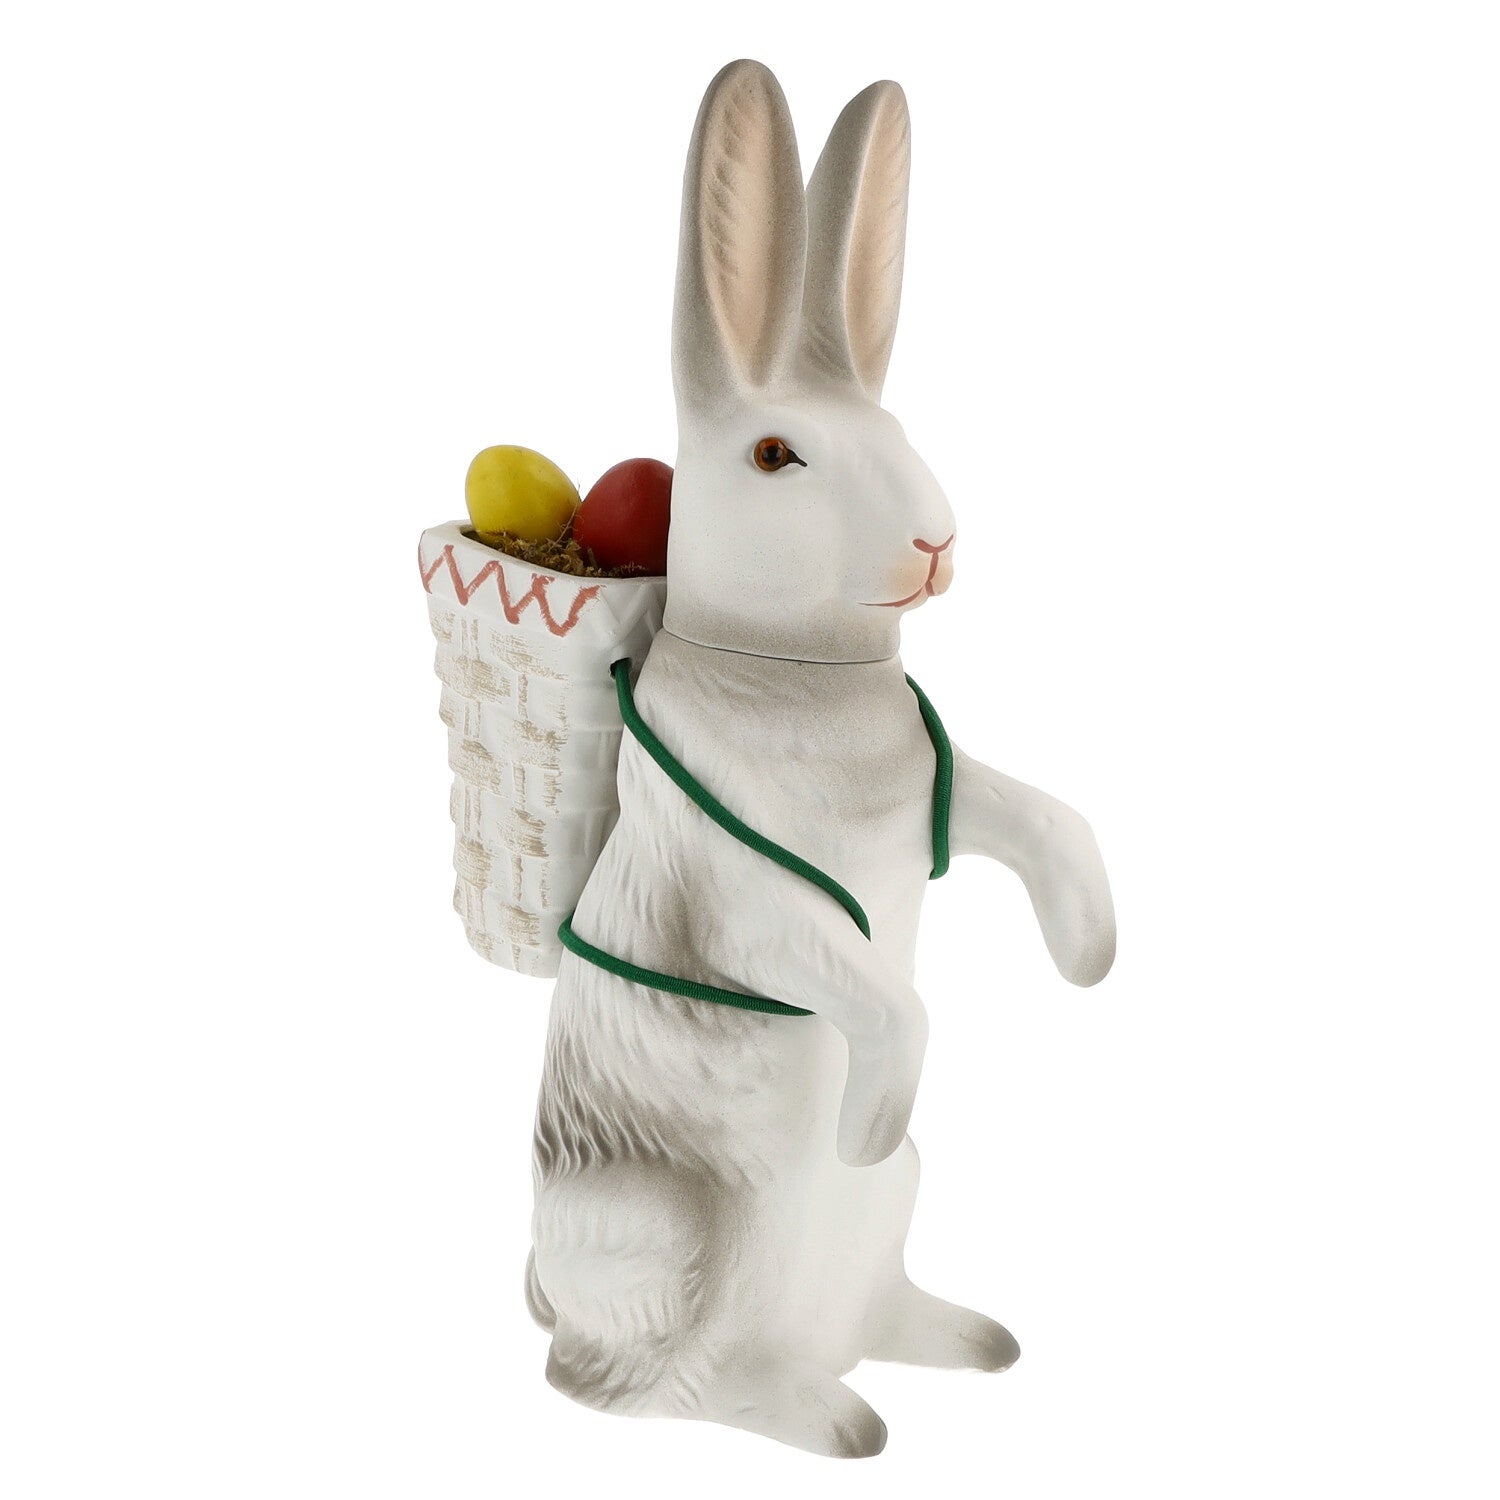 Upright Bunny with basket, white with black by Marolin Manufaktur